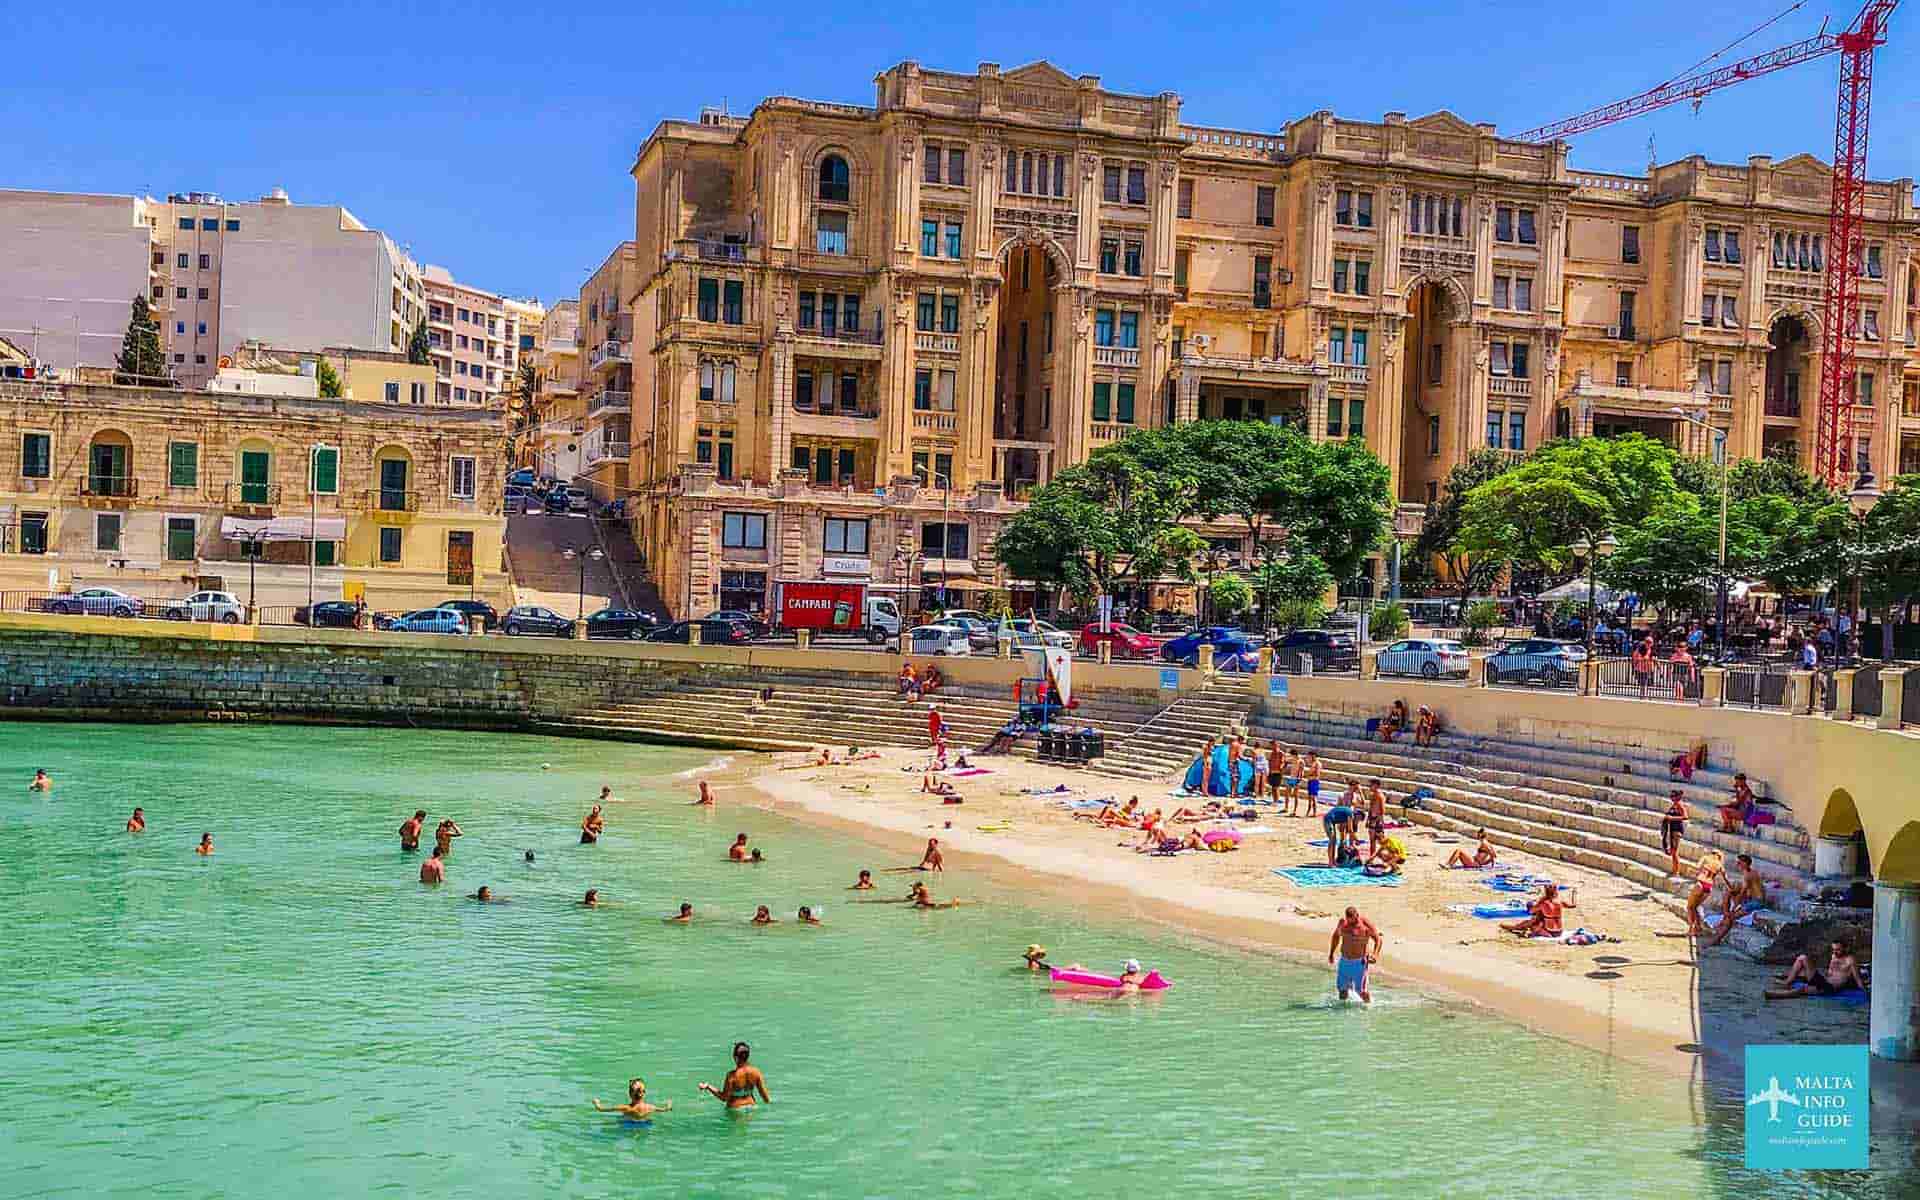 People swimming and sunbathing at Balluta bay beach Malta.